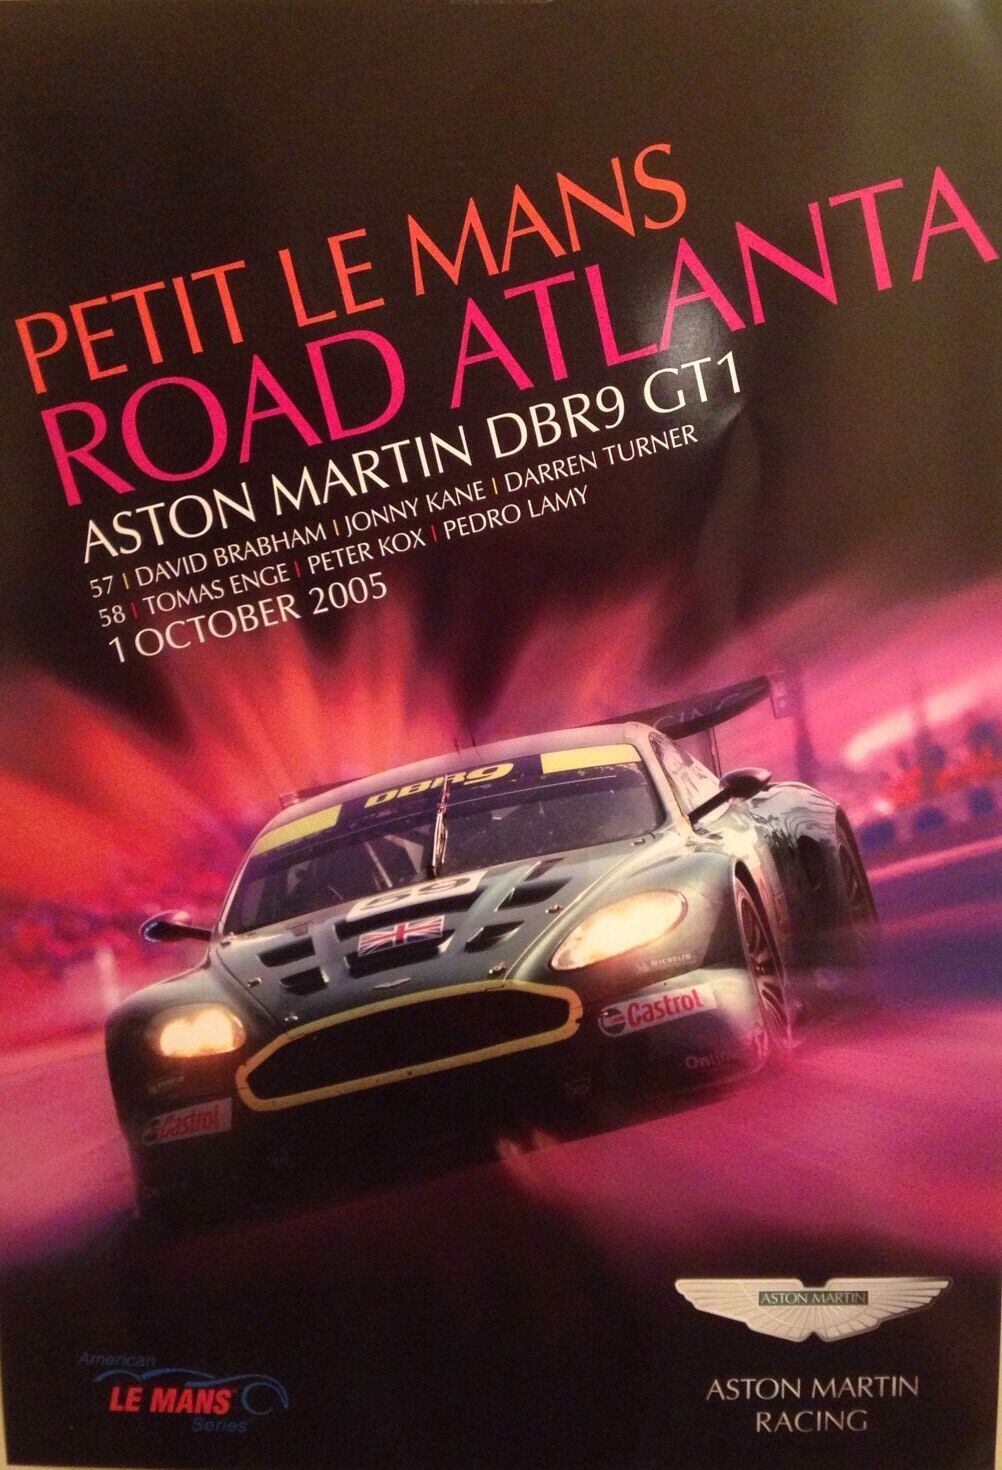 Aston Martin DBR9 GT1 Road Atlanta Petit Le Mans 2005 Event Rare Car Poster:>)